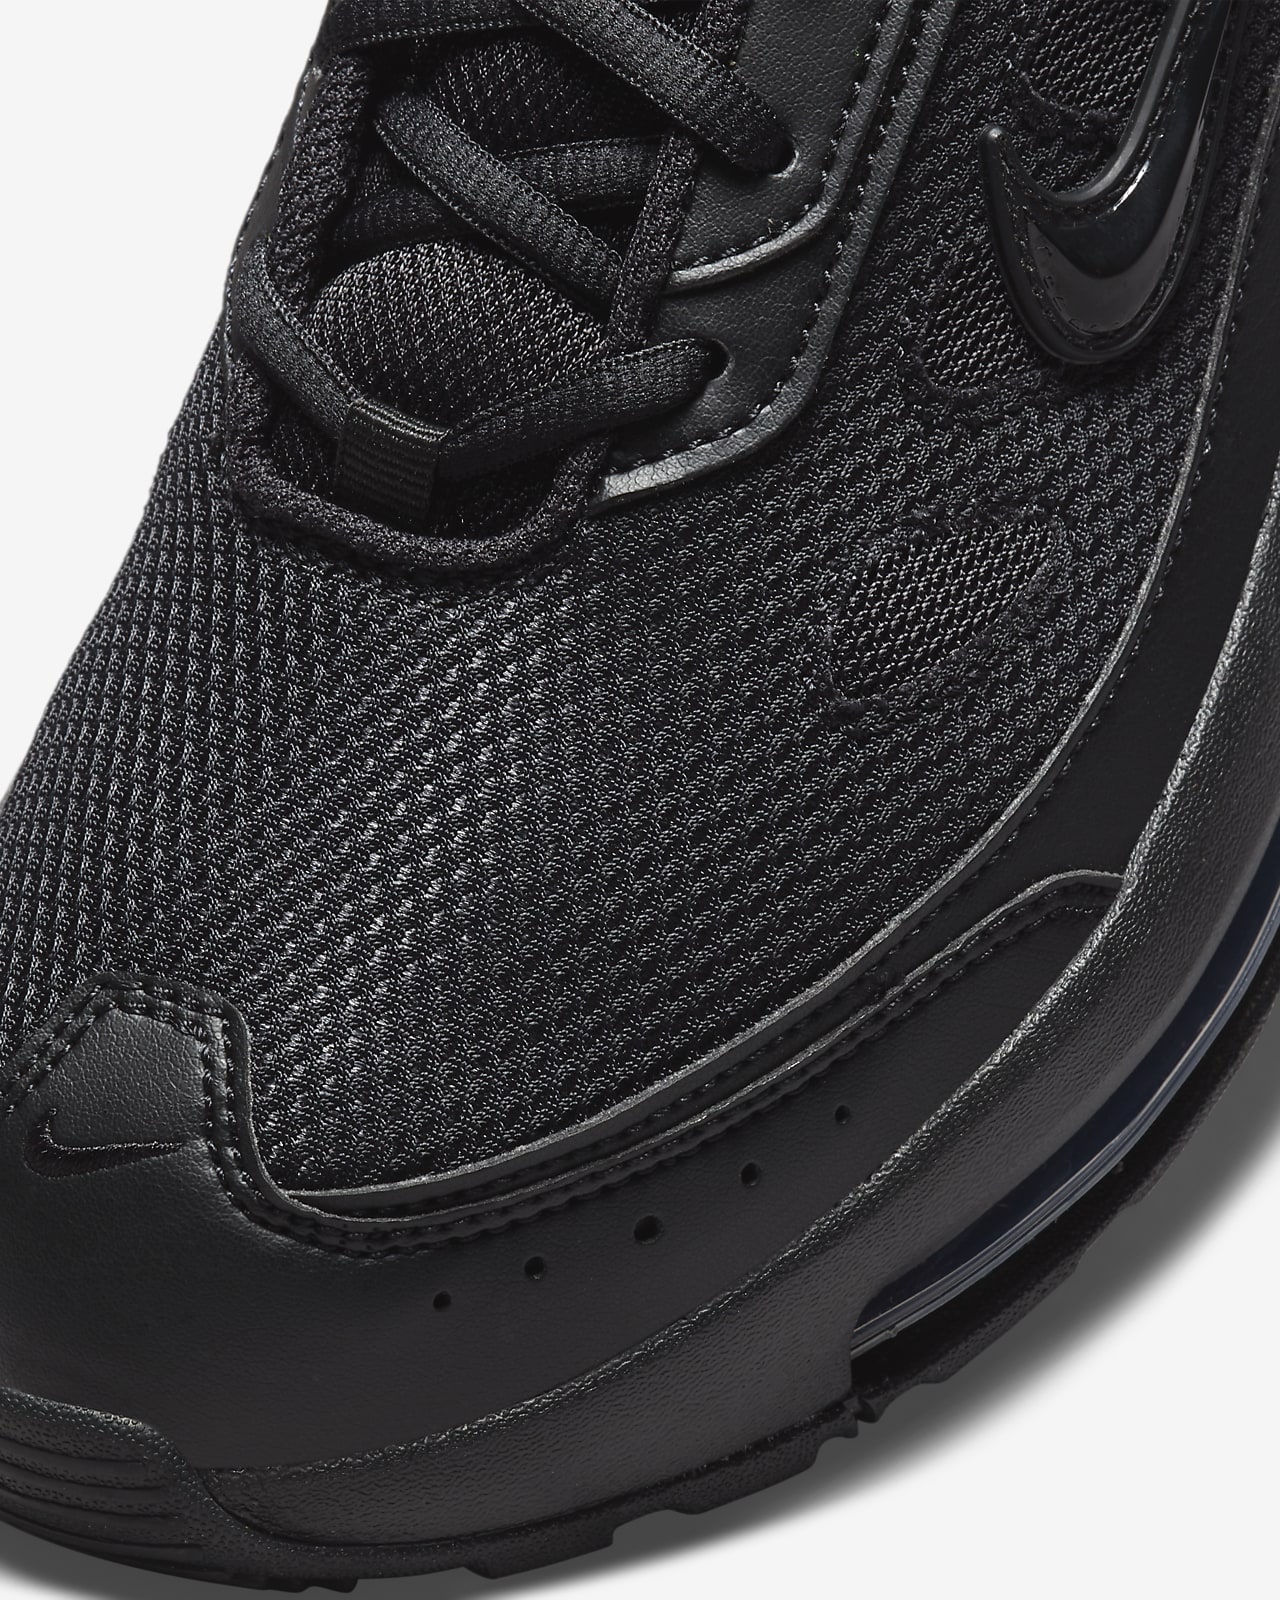 Nike Men's Sneakers - Black - US 10